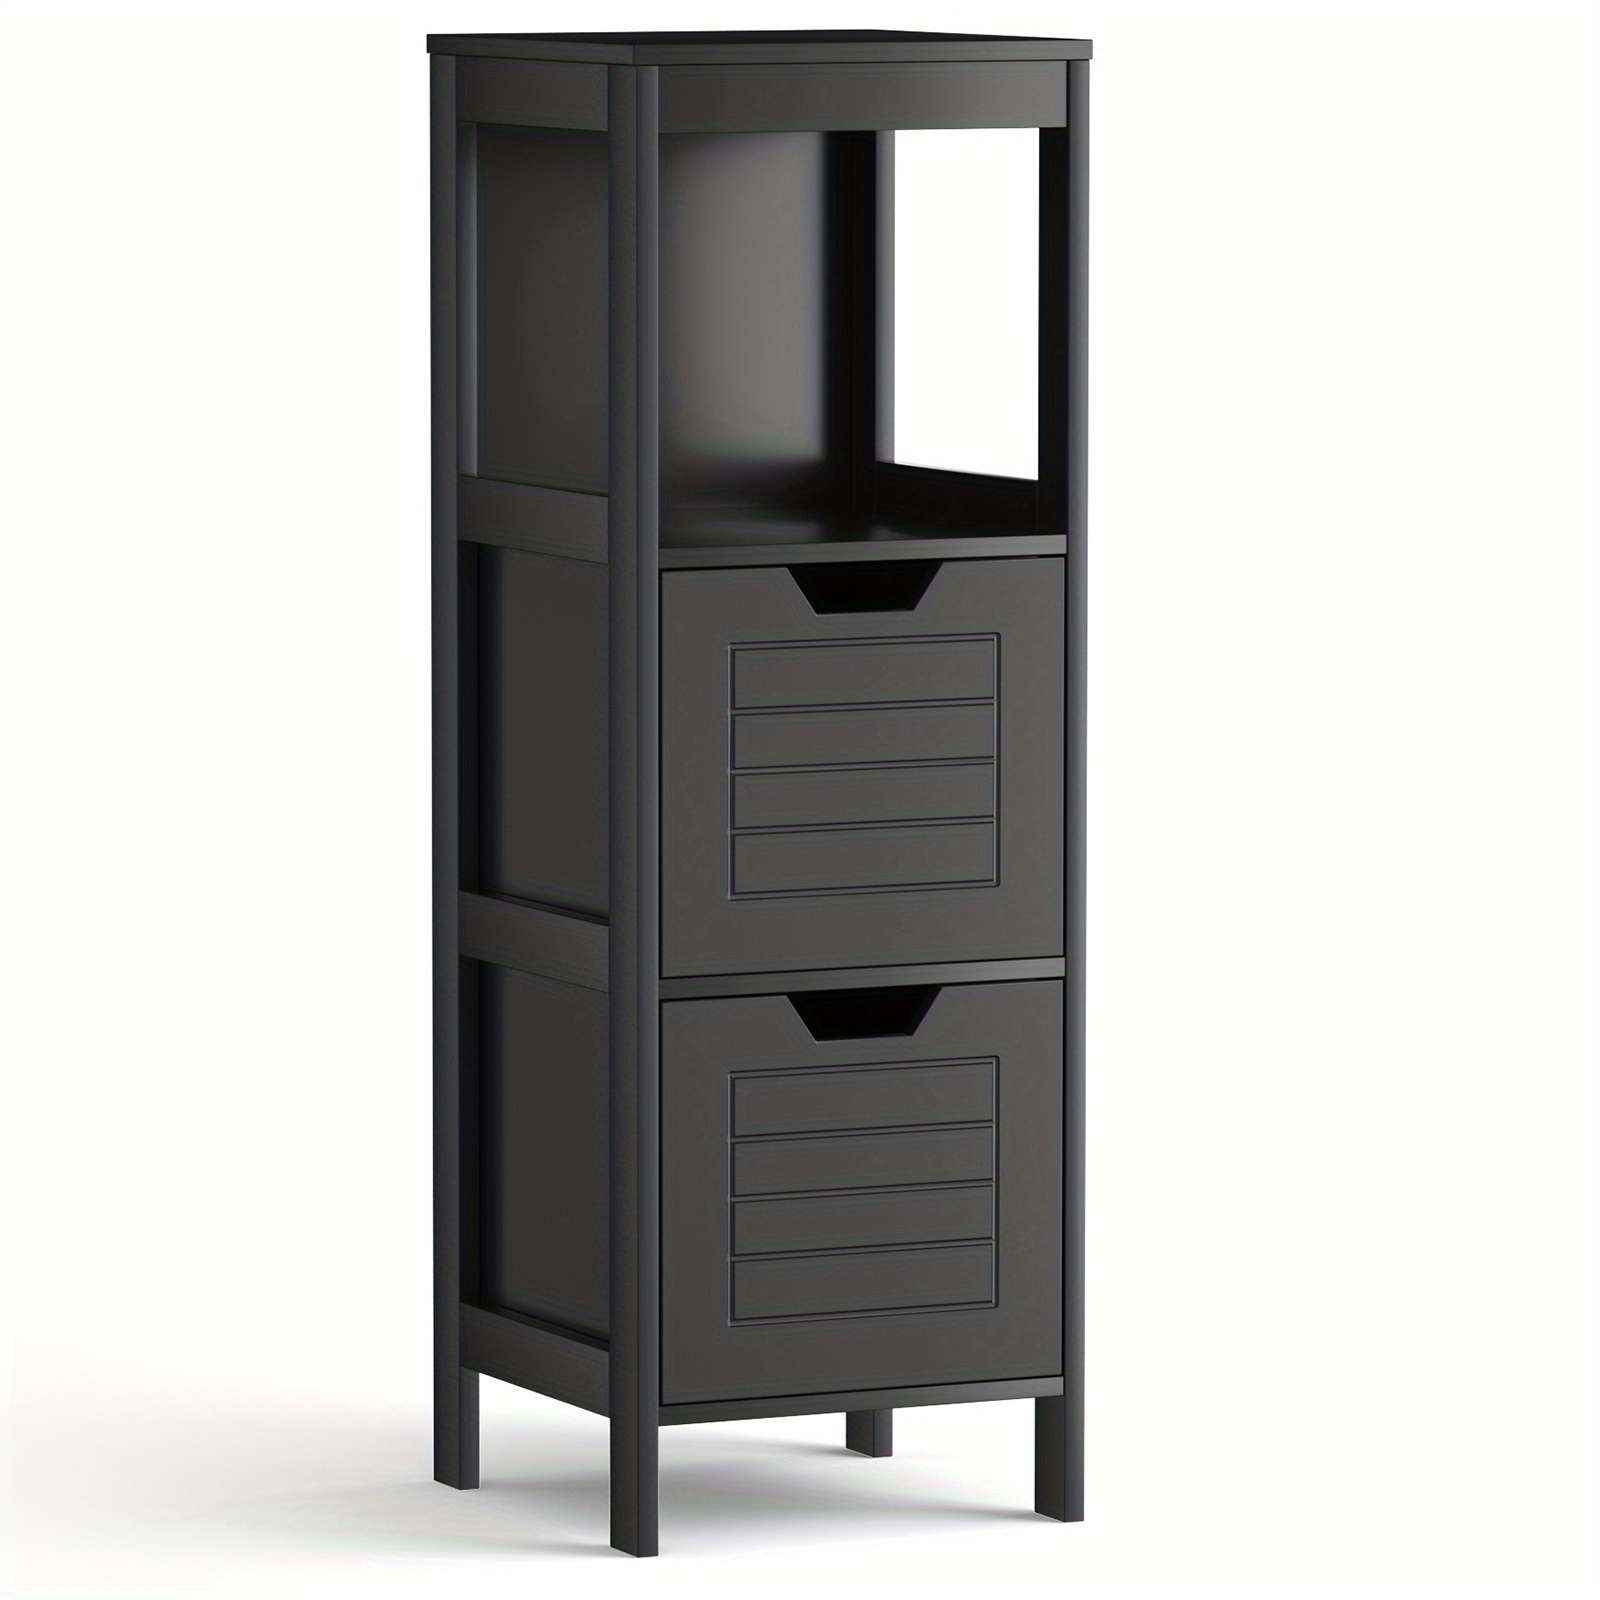 

Lifezeal Bathroom Wooden Floor Cabinet Multifunction Storage Rack Organizer Black